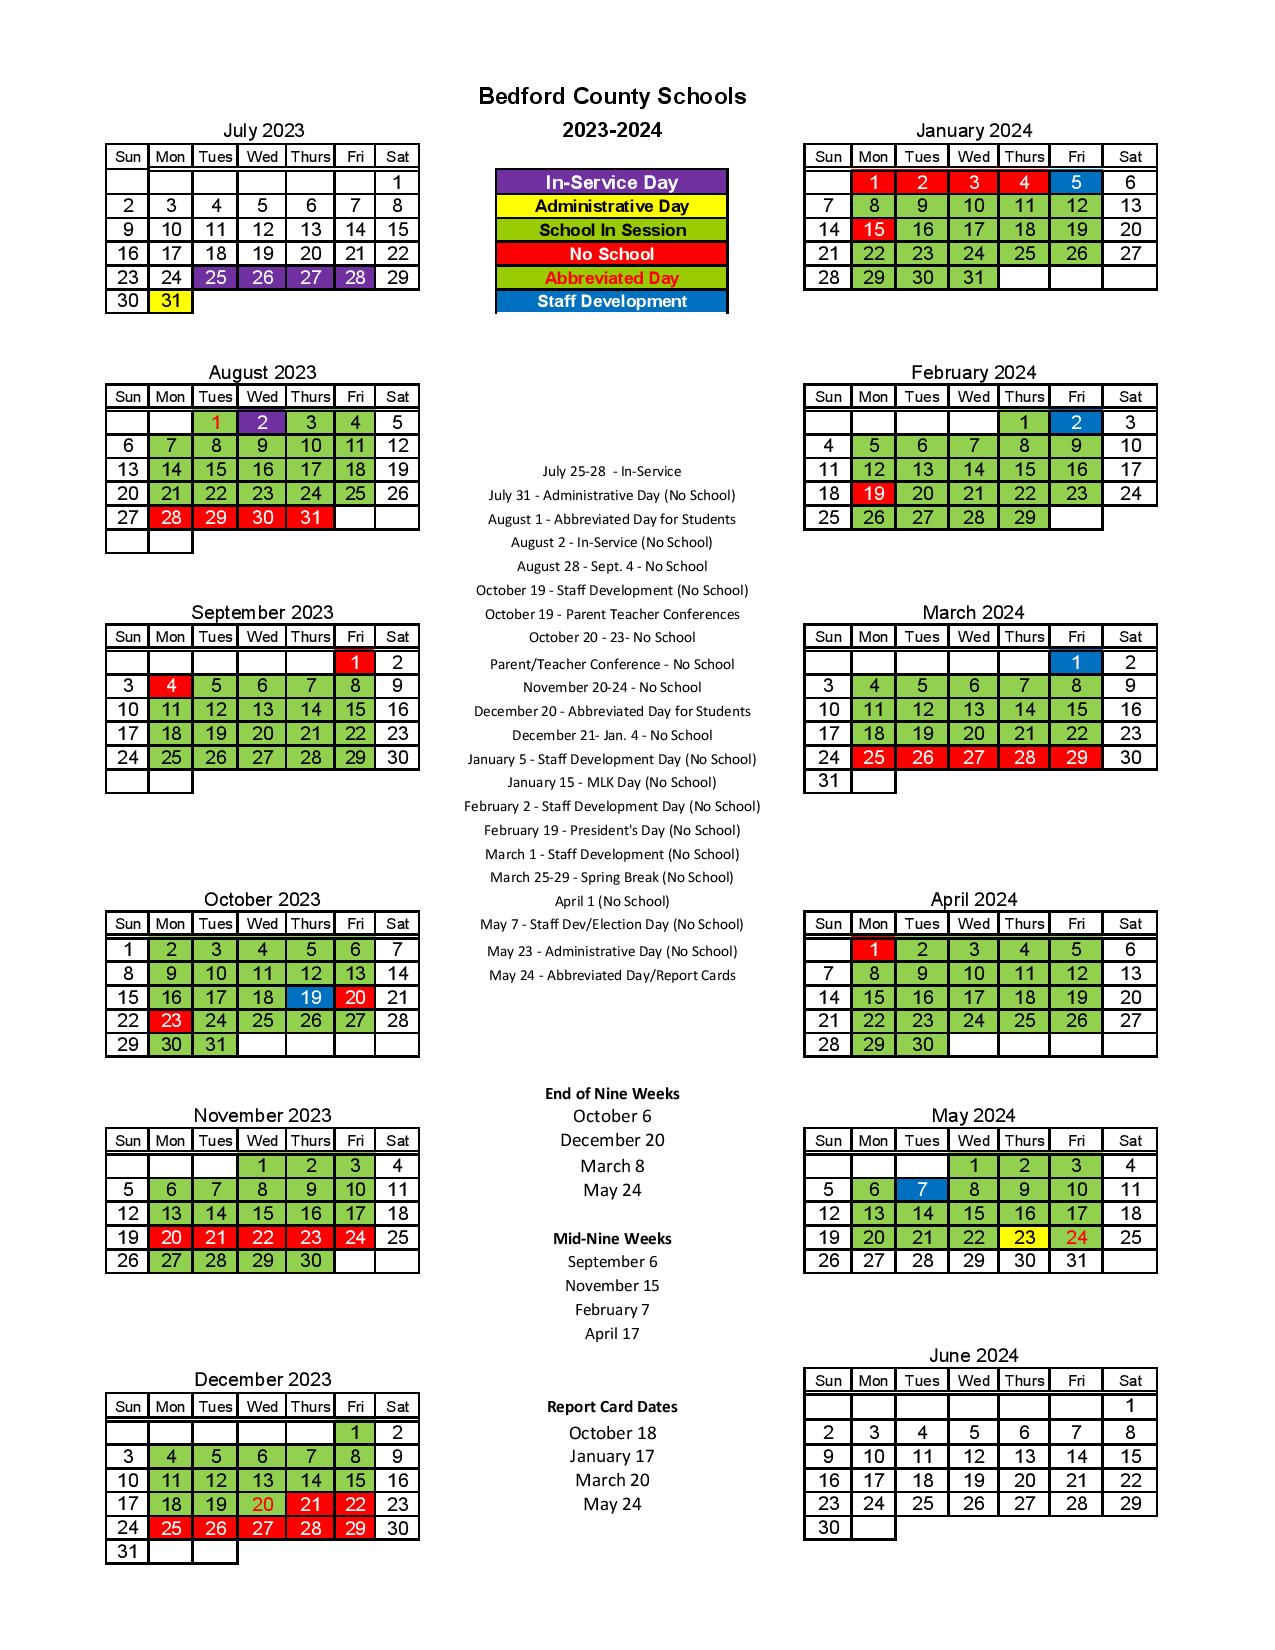 bedford-county-schools-calendar-2023-2024-in-pdf